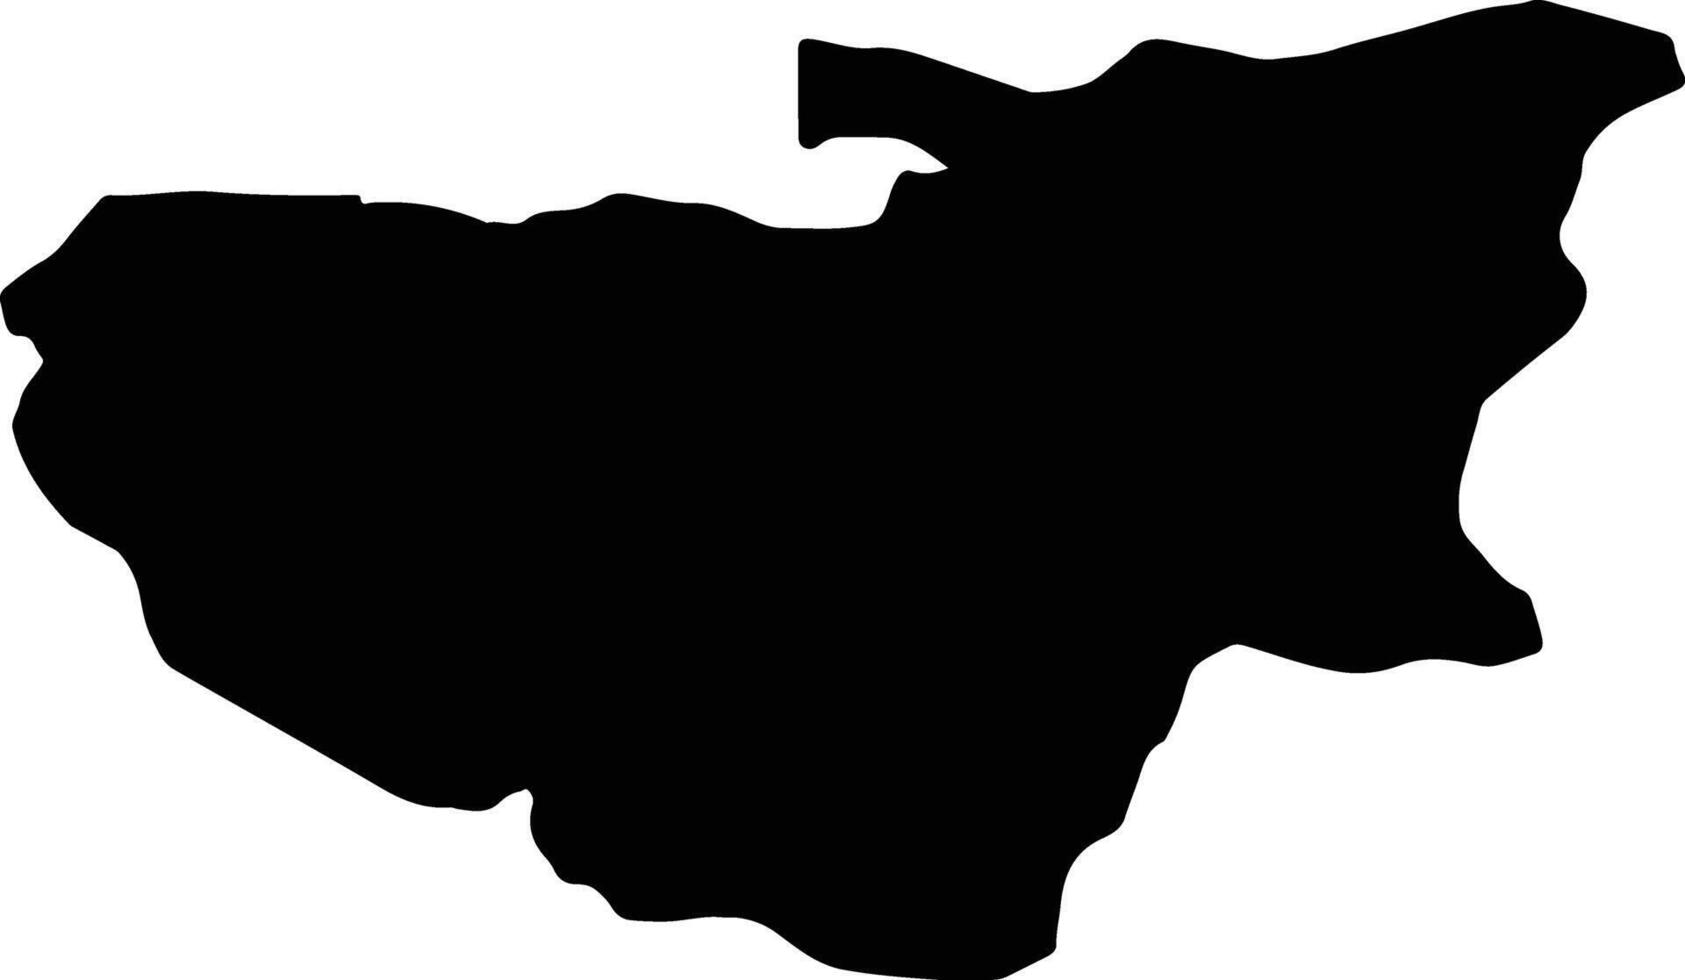 Bursa Turkey silhouette map vector